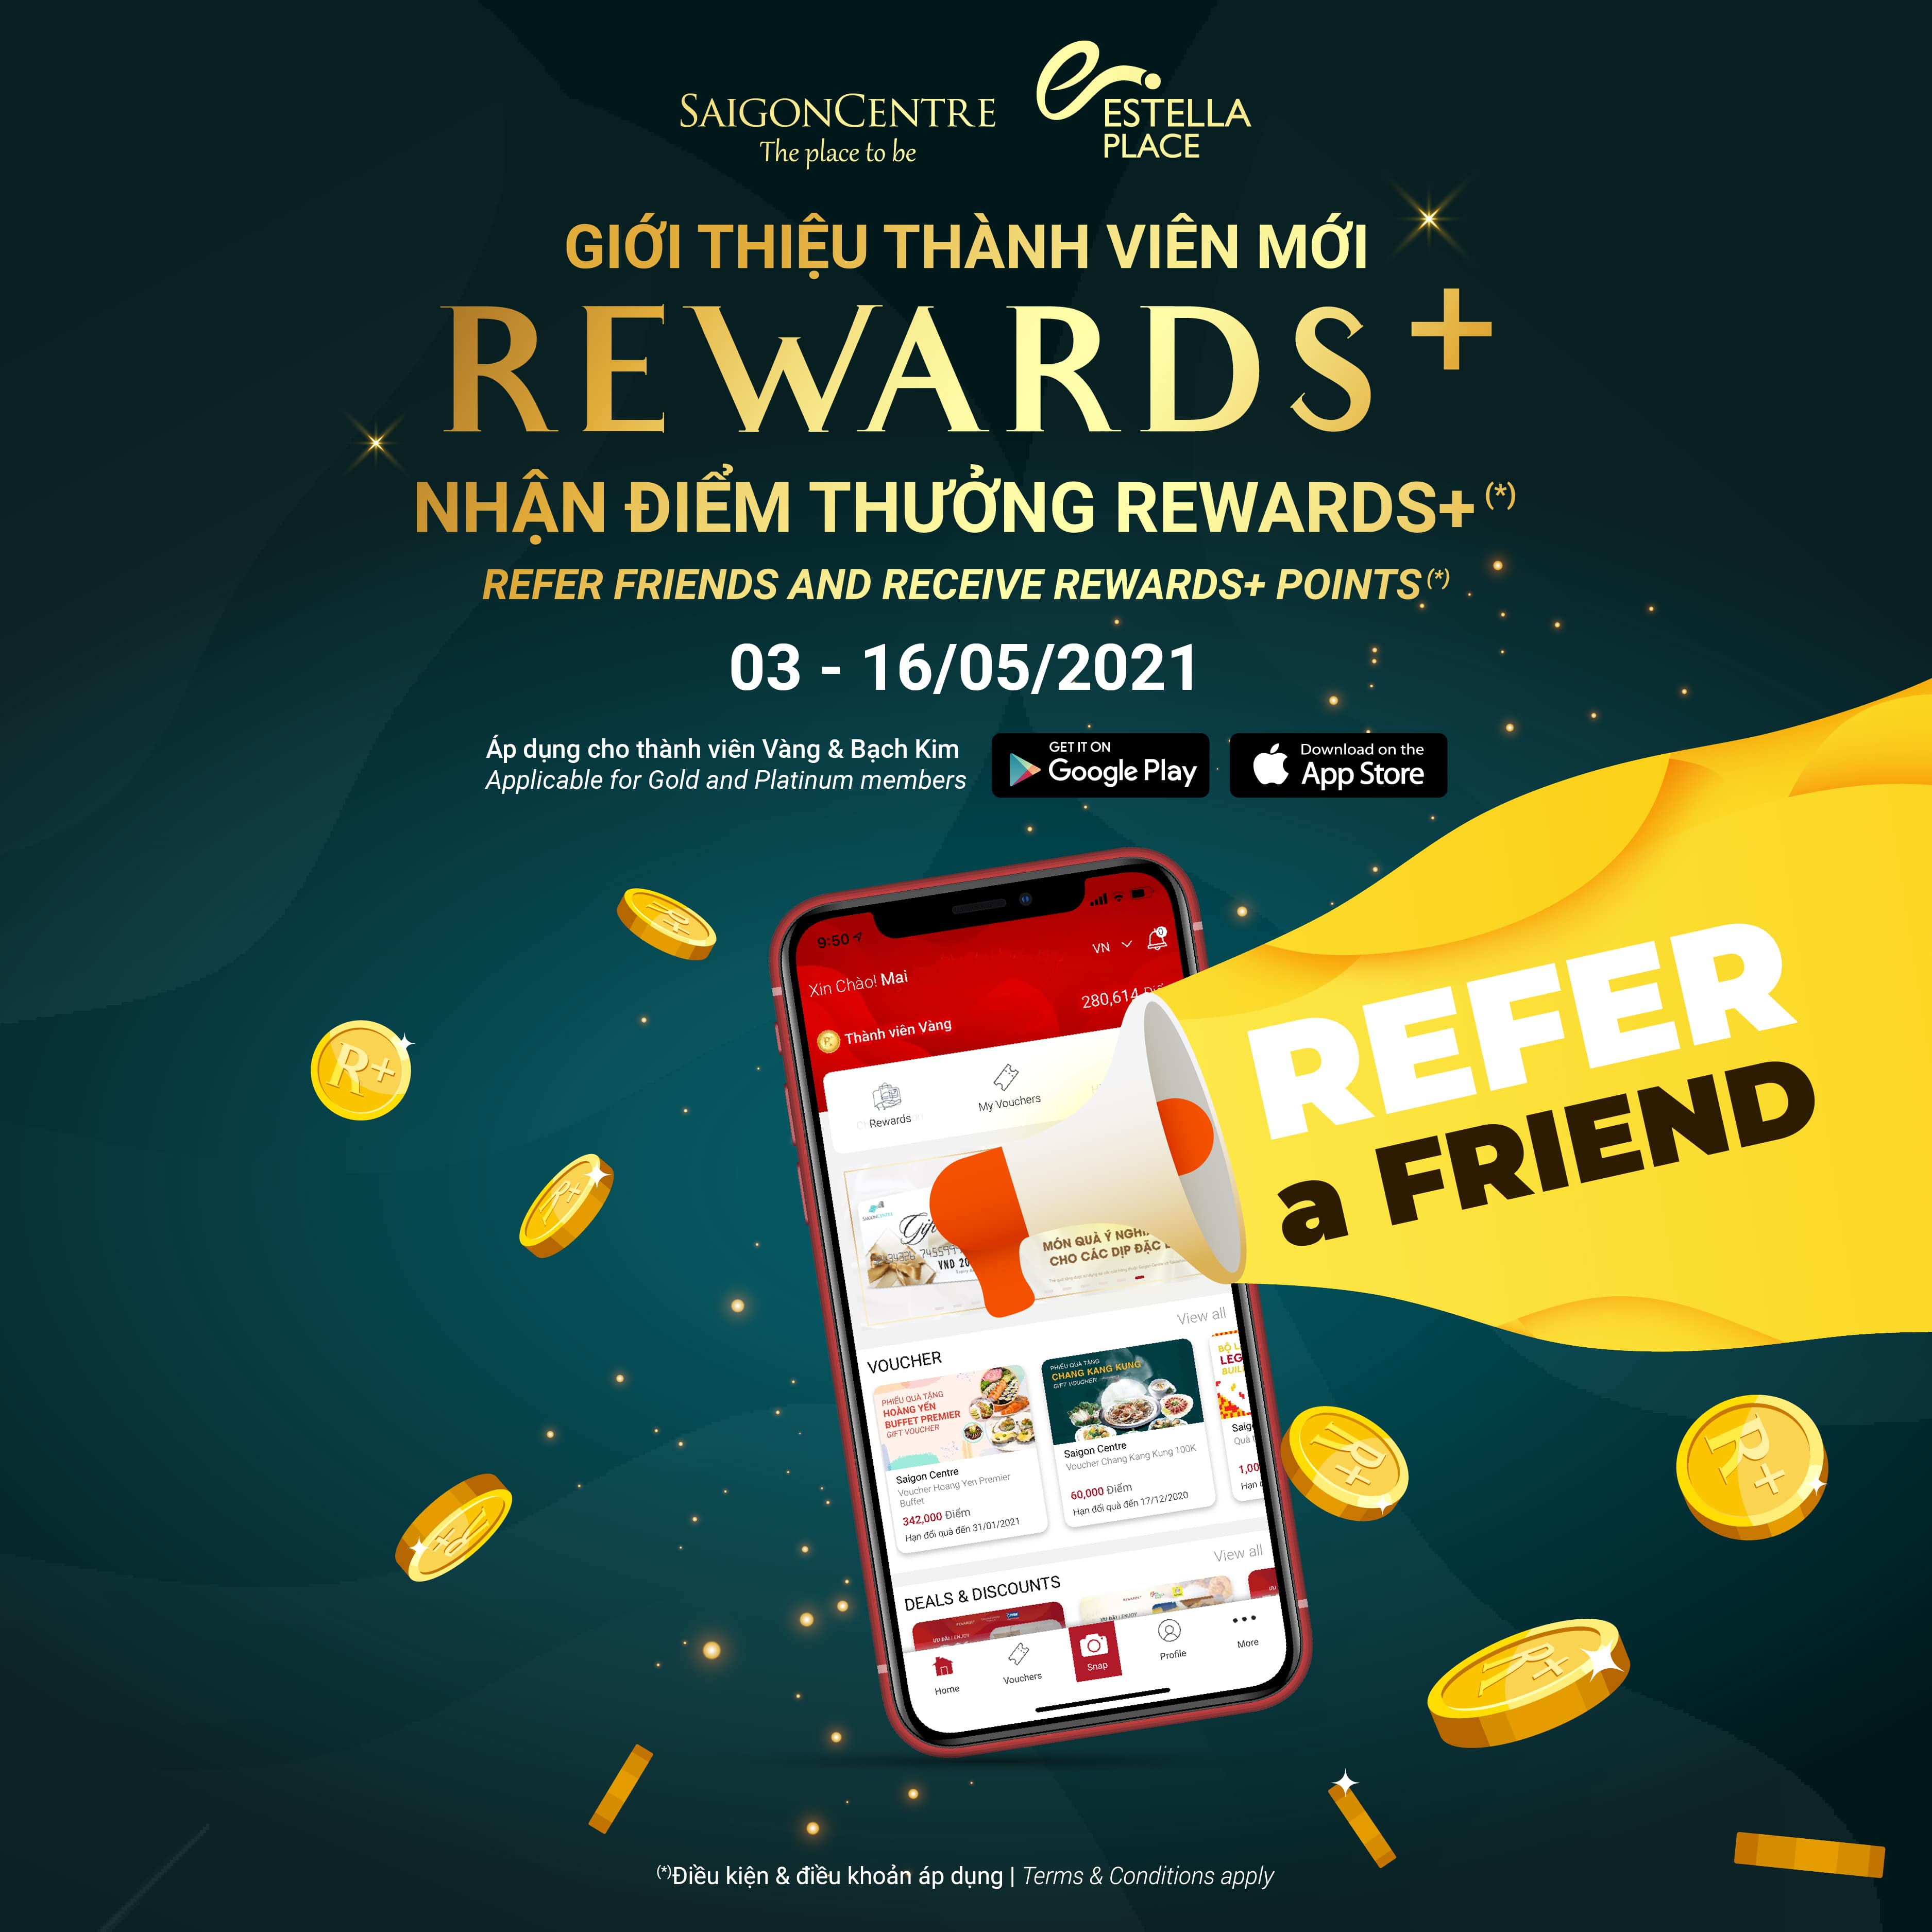 REFER FRIENDS - RECEIVE REWARDS+ POINTS